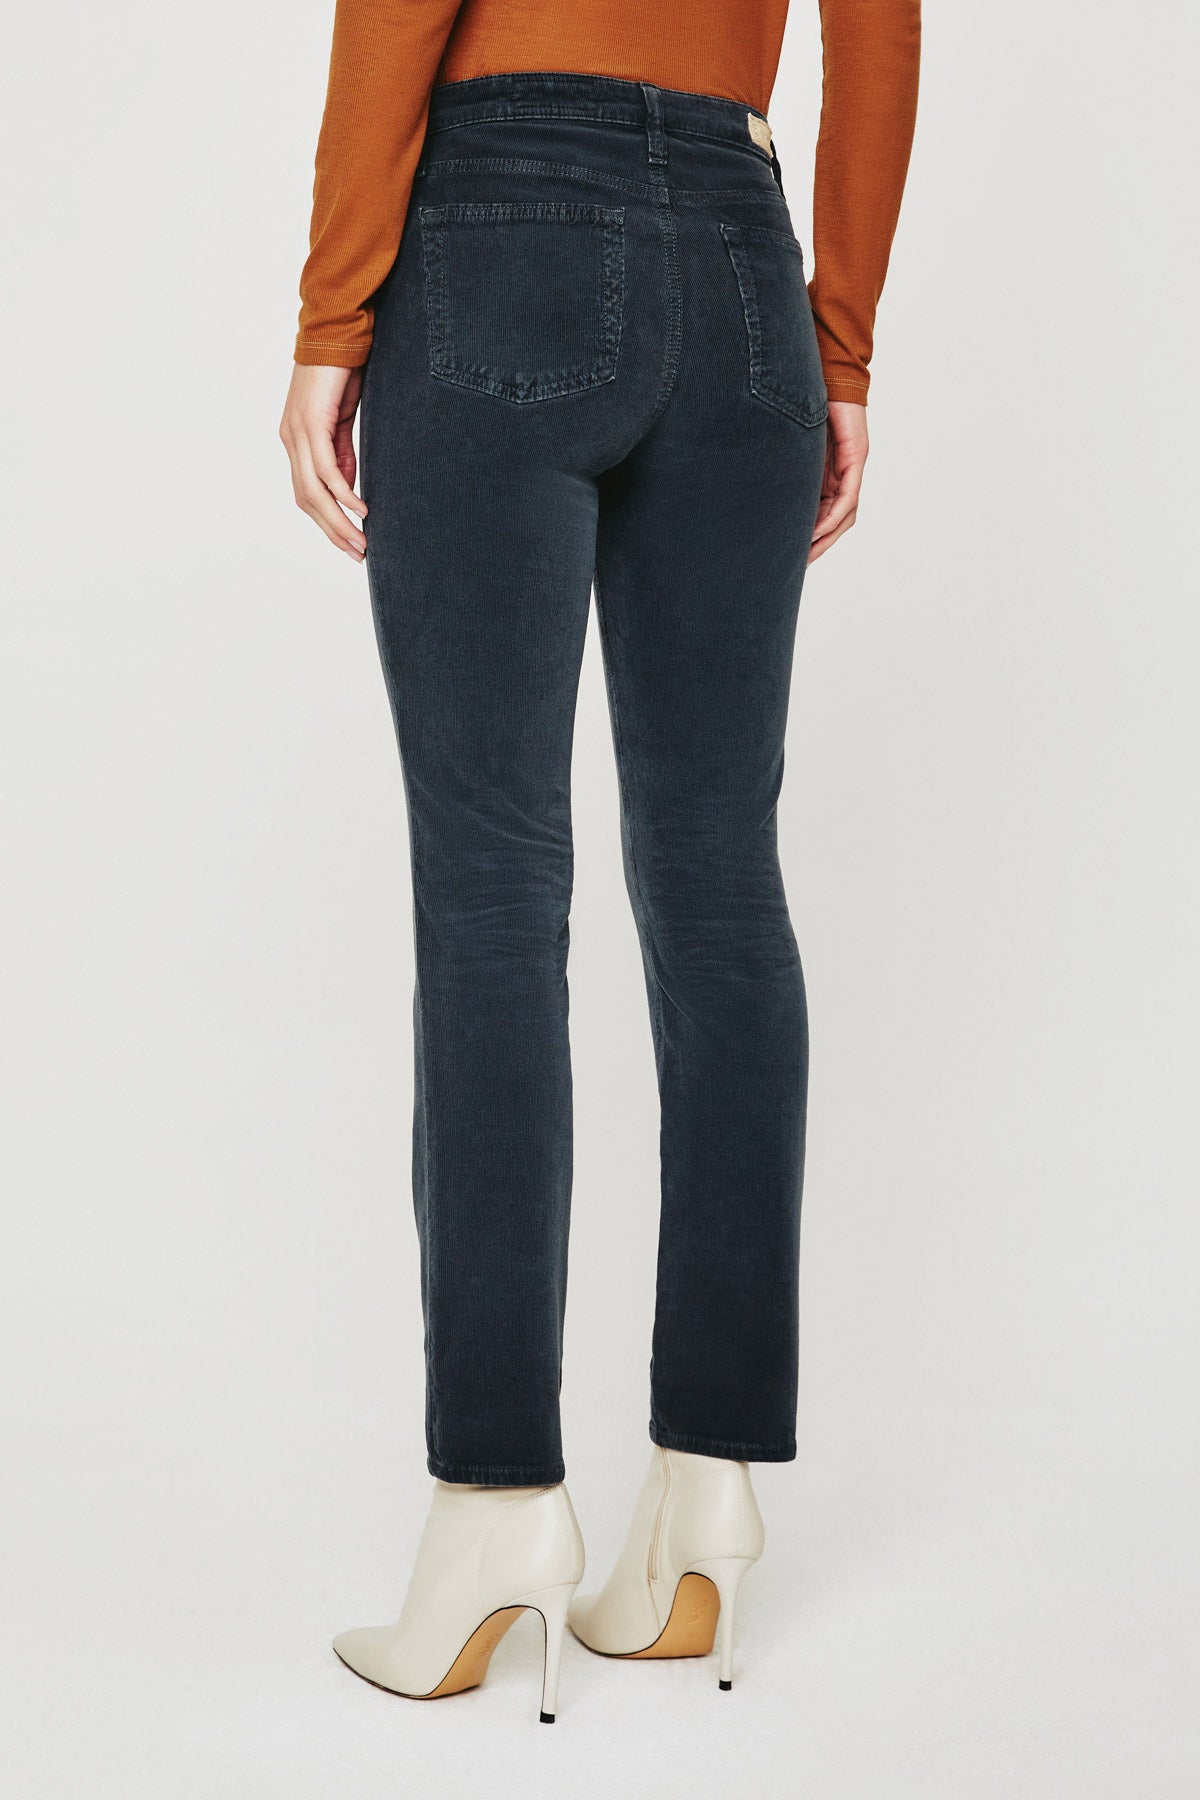 ag jeans mari high rise jean in grey corduroy, rear view